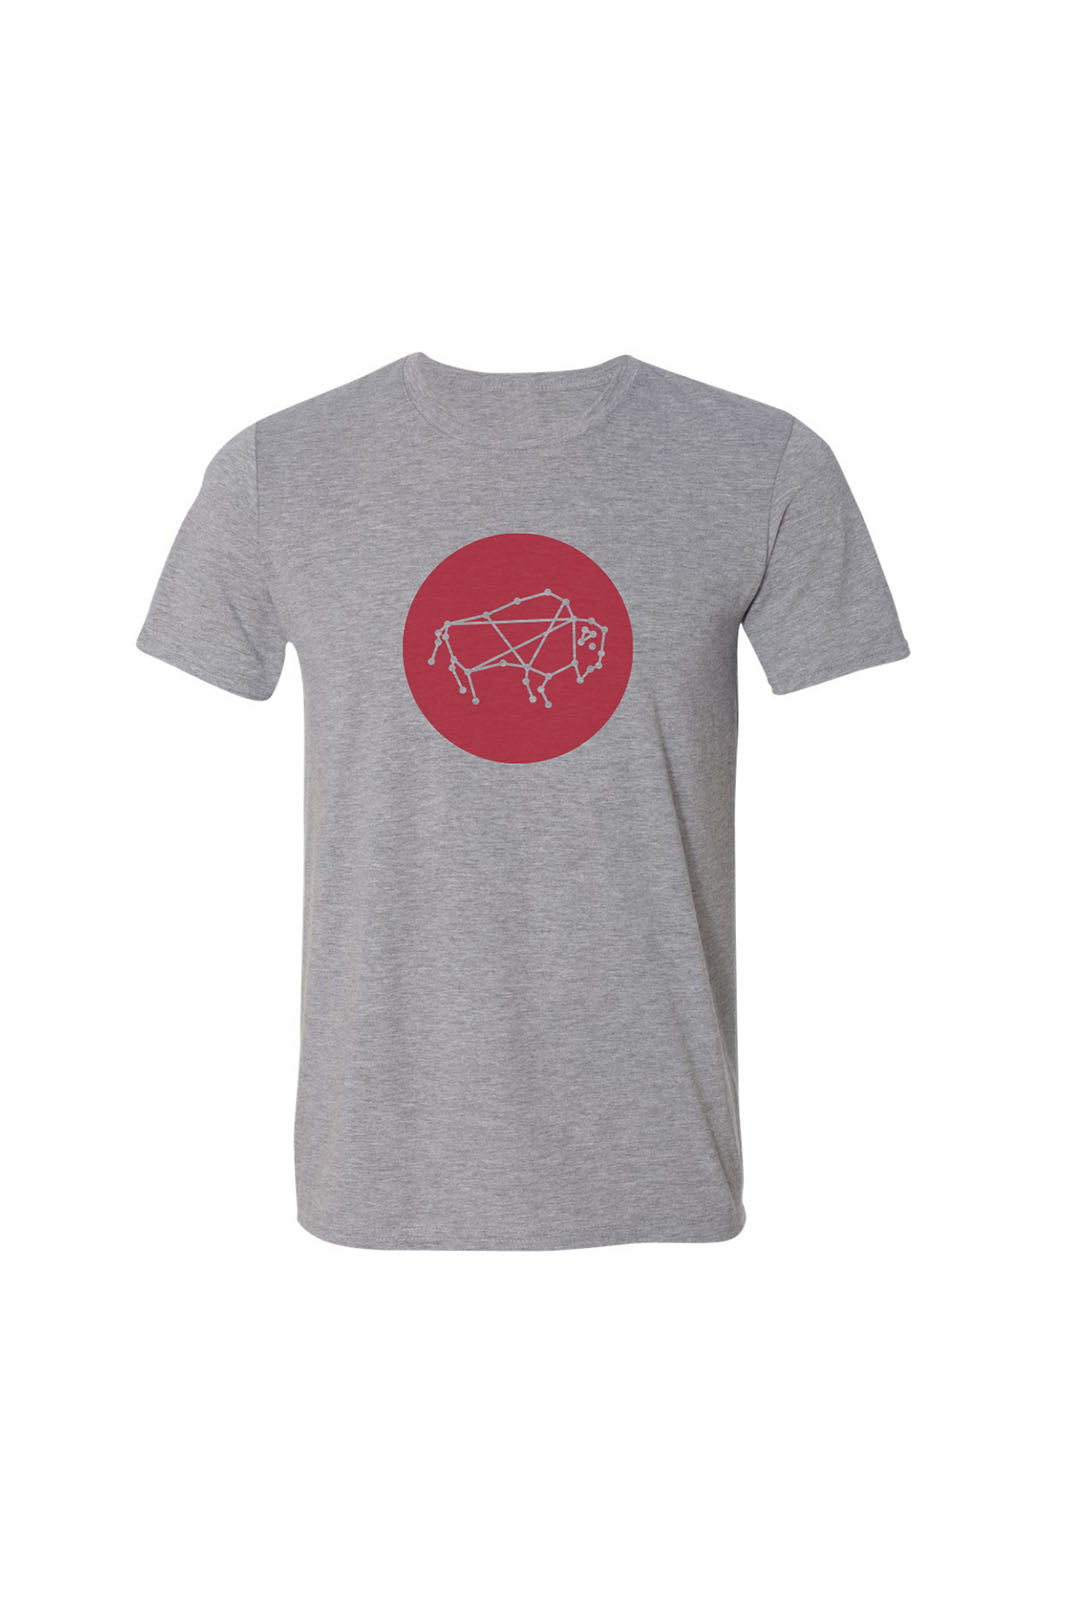 Buffalo Constellation Circle T-Shirt - Gray/Red